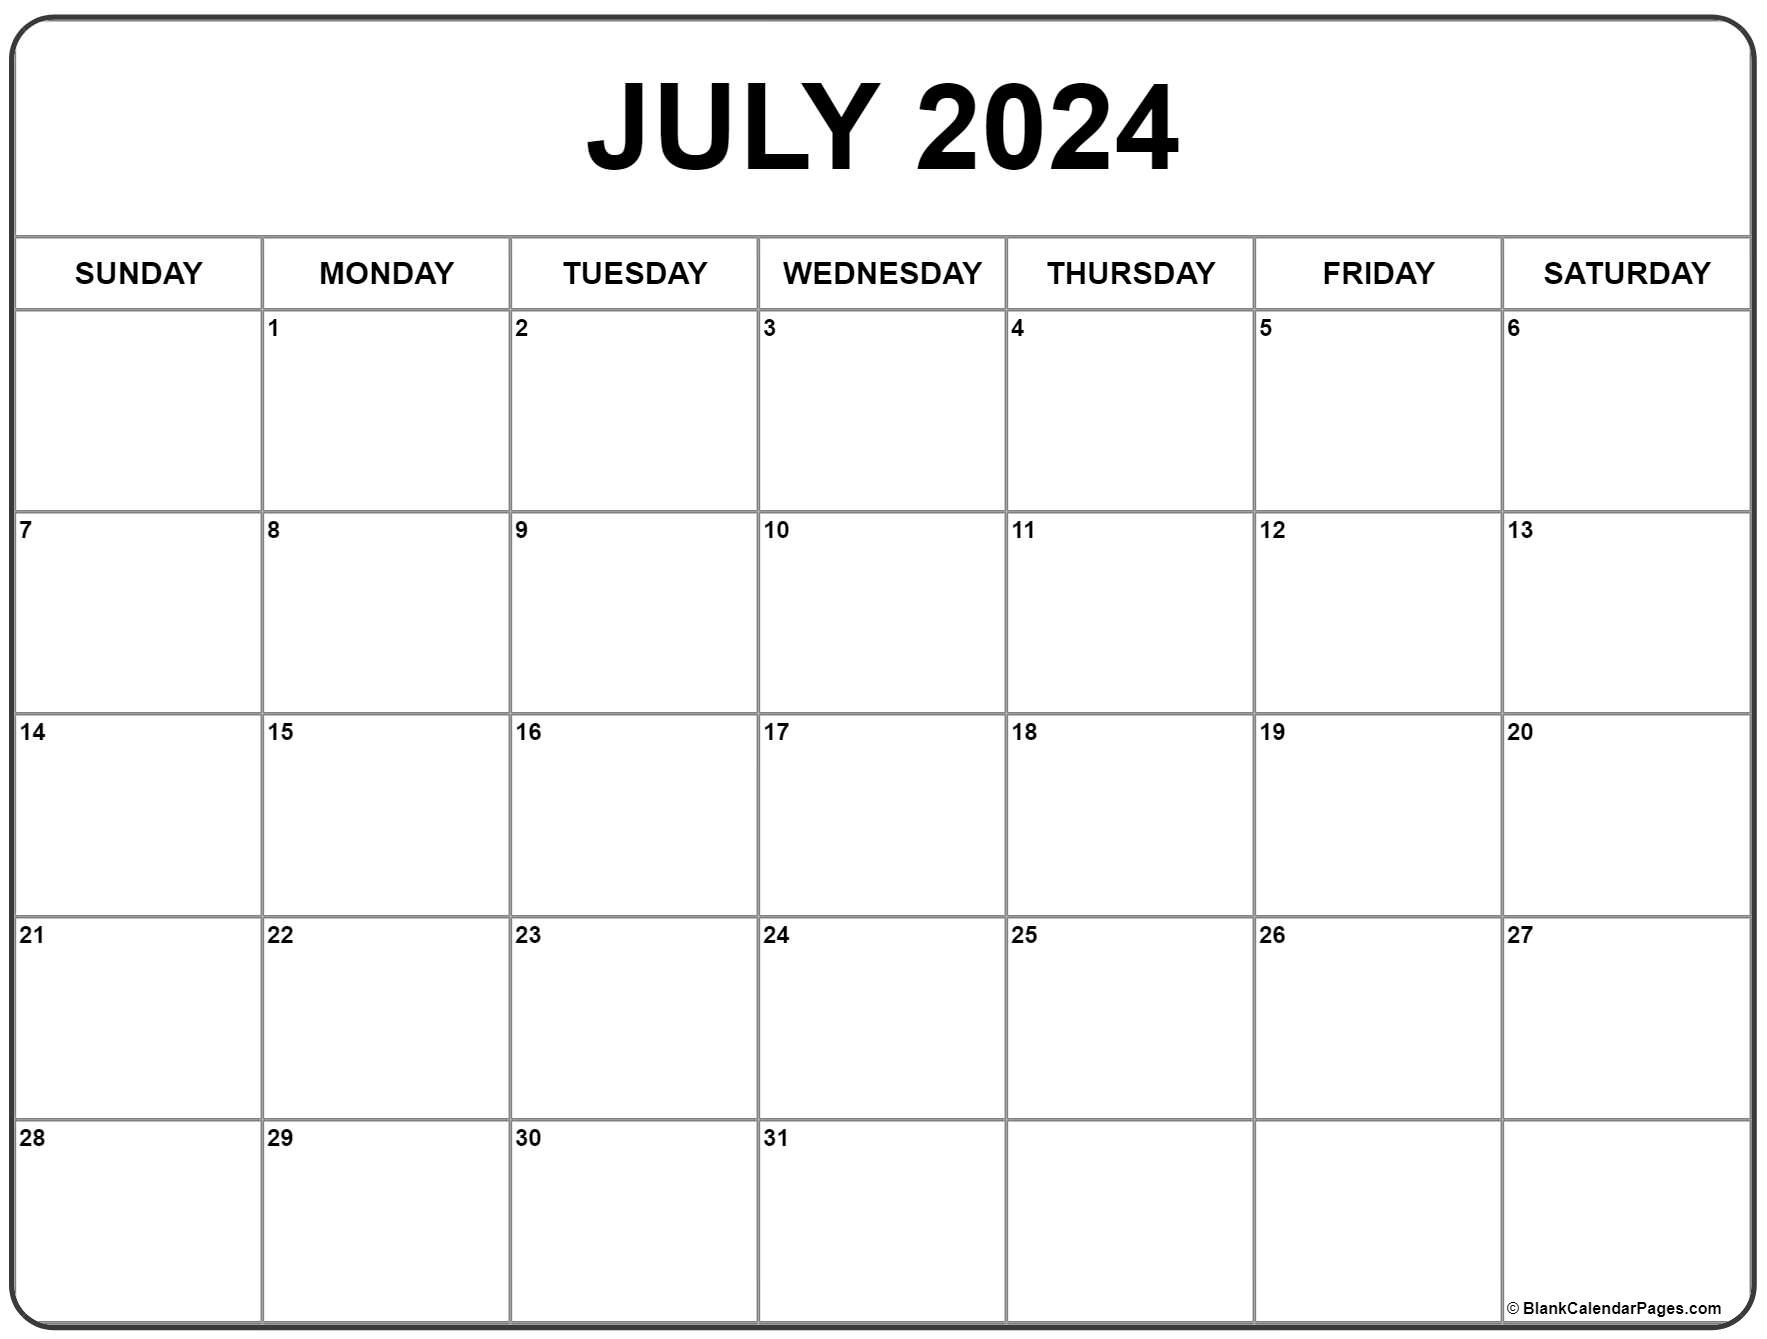 July 2024 Calendar | Free Printable Calendar for Free Printable Calendar 2024 July